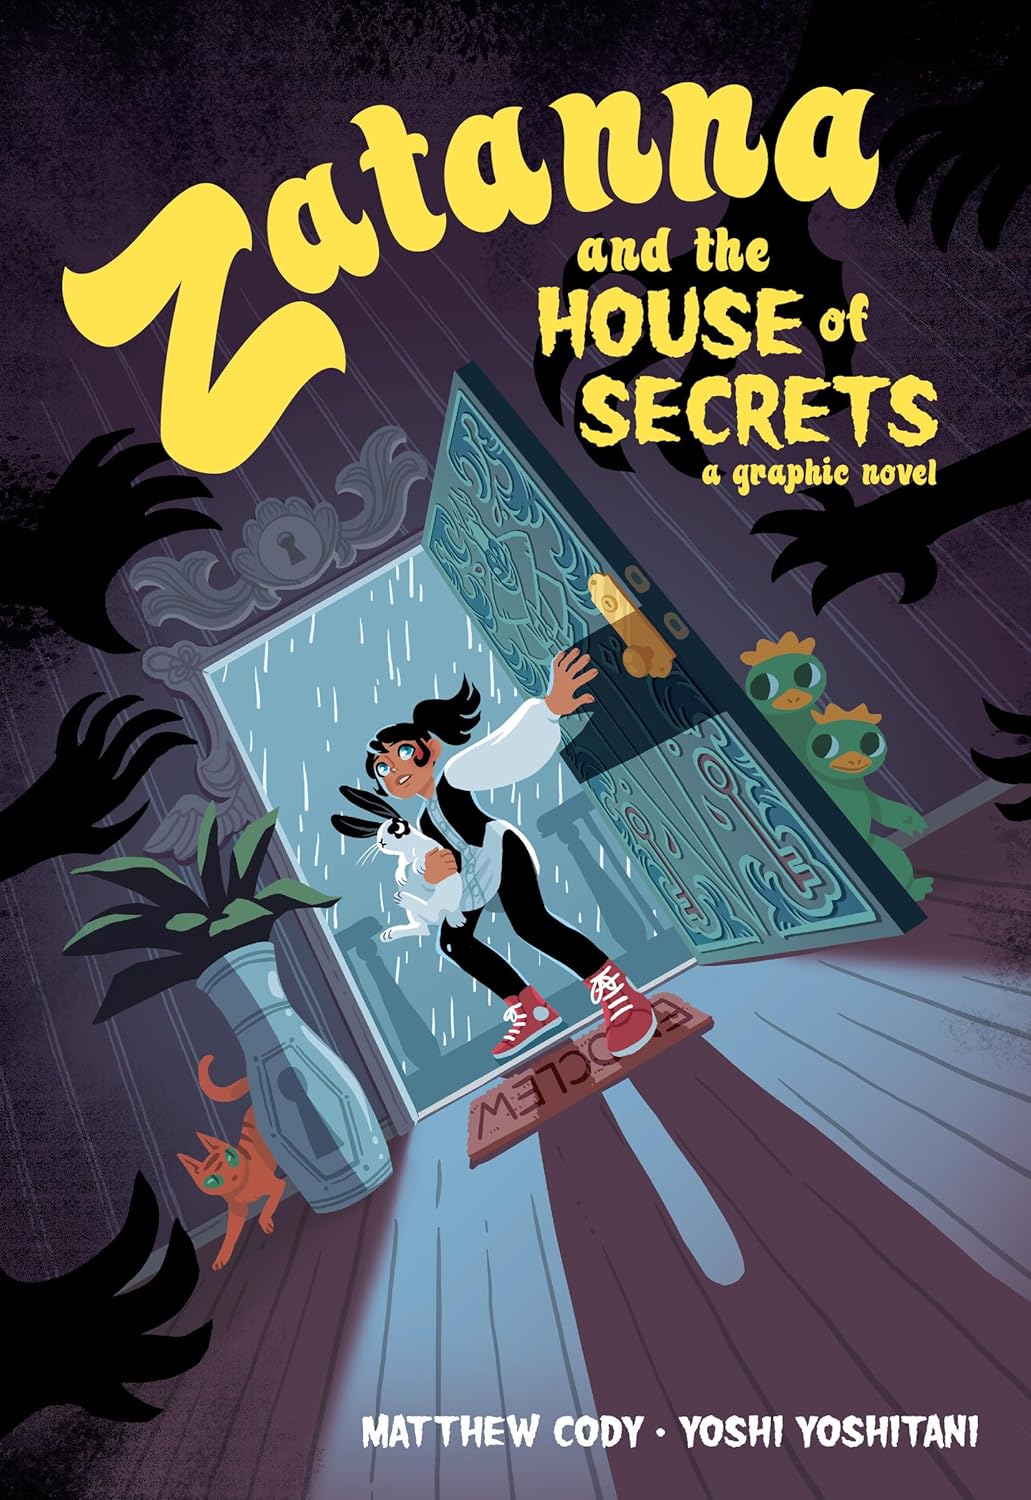 ZATANNA AND THE HOUSE OF SECRETS TP